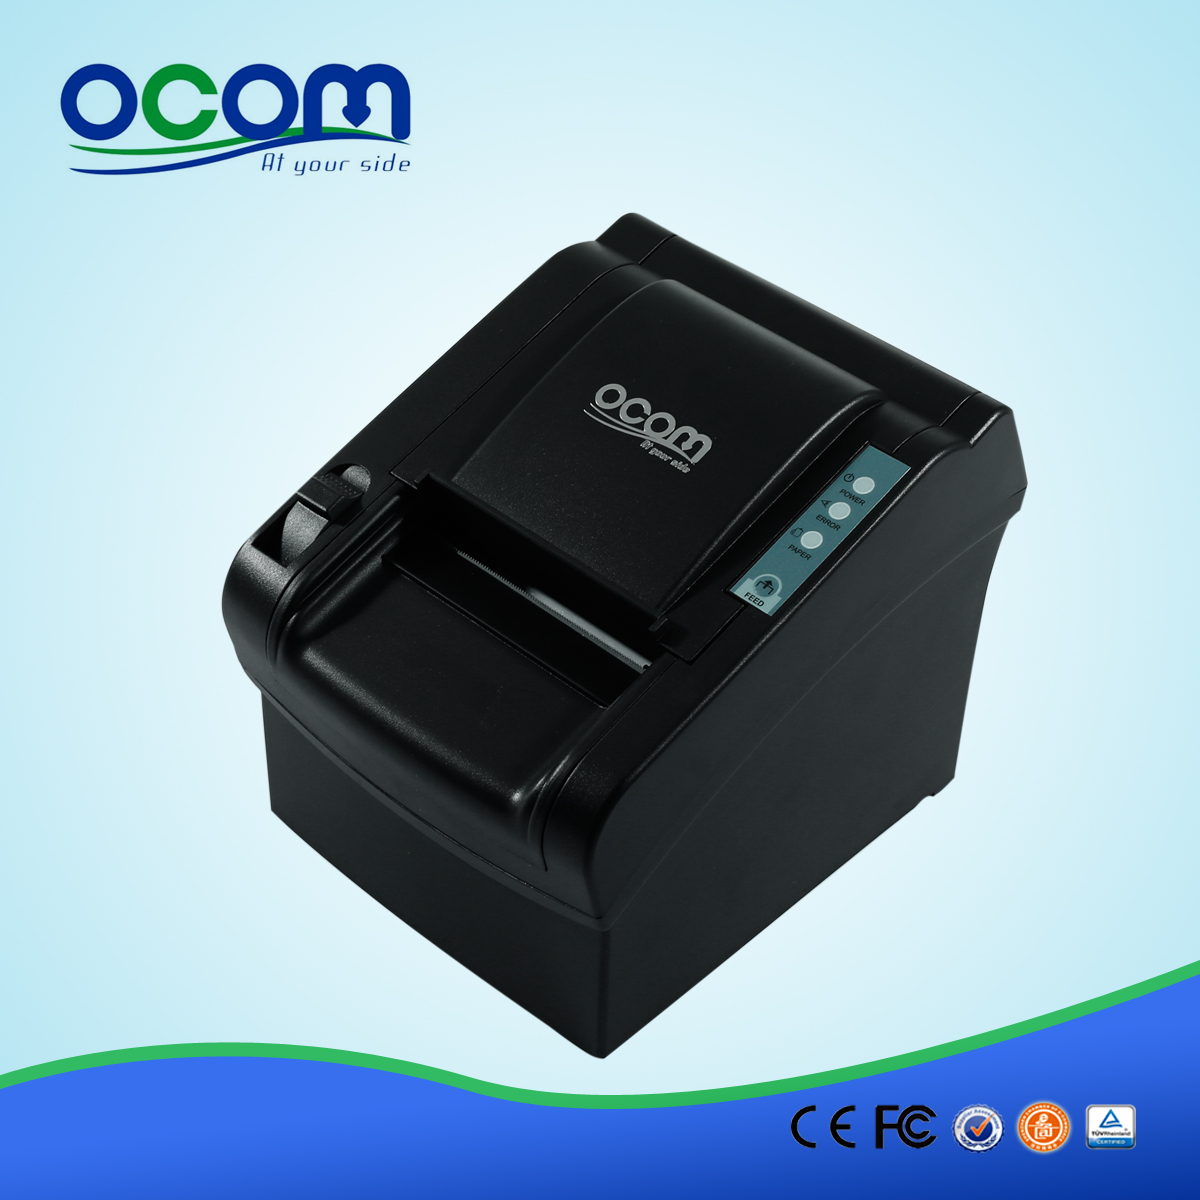 OCPP-802 USB barato Impresora térmica de recibos En China